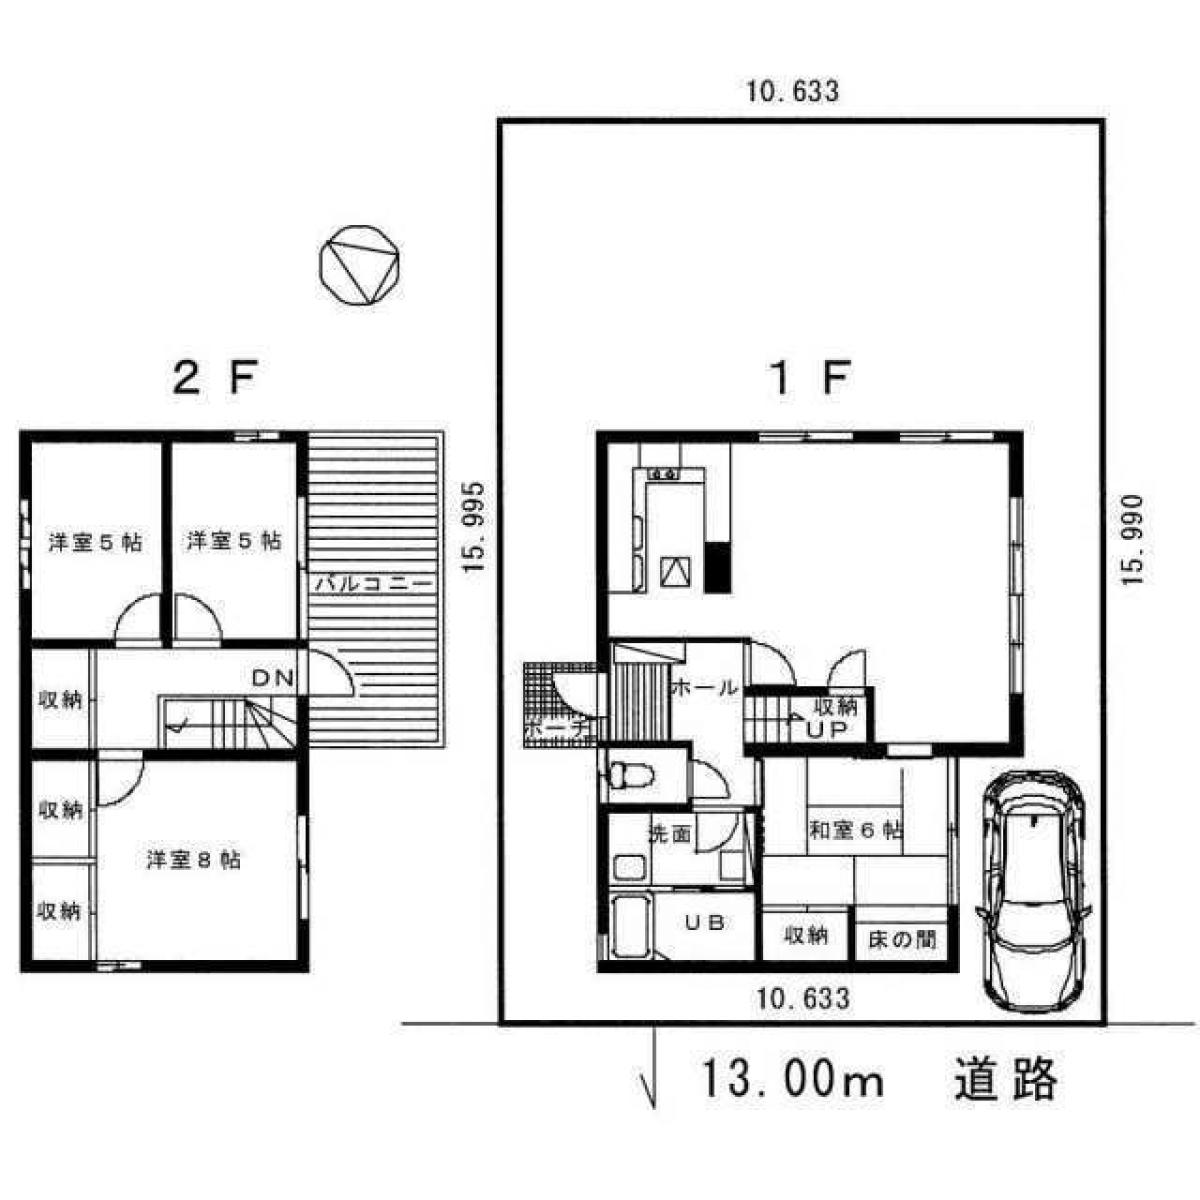 Picture of Home For Sale in Hasuda Shi, Saitama, Japan